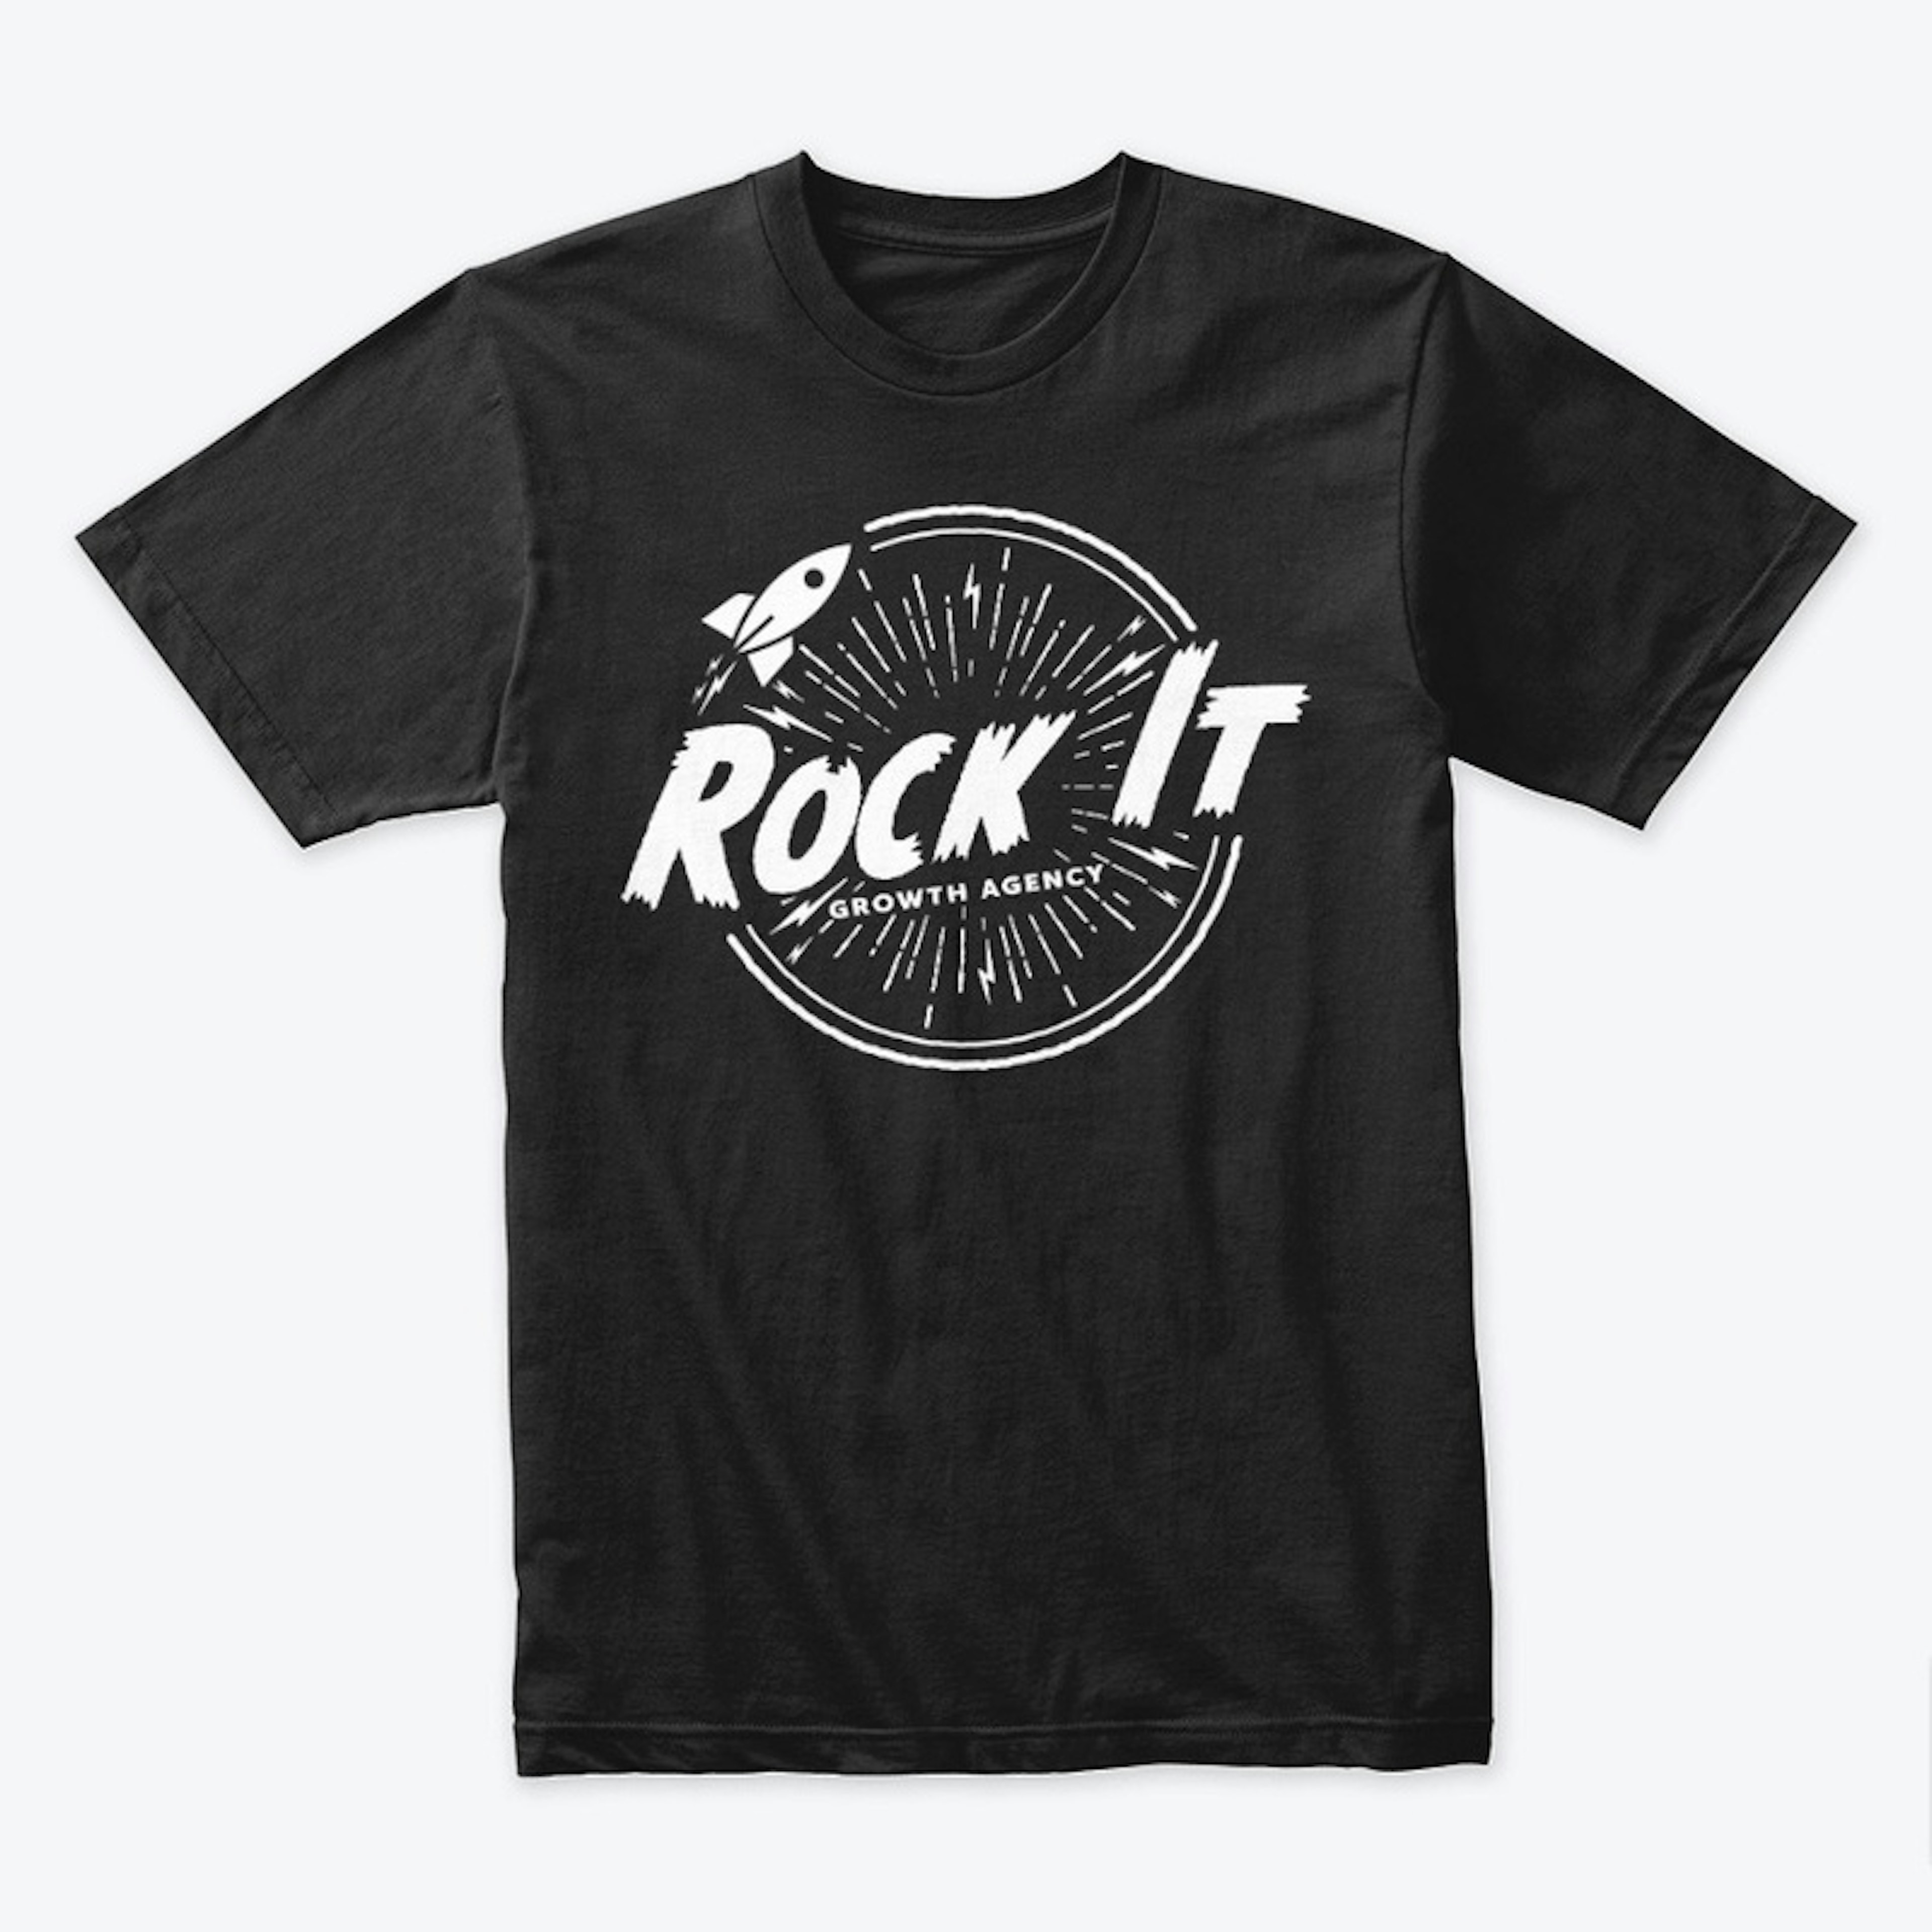 Premium Rock It Growth Agency T Shirt 